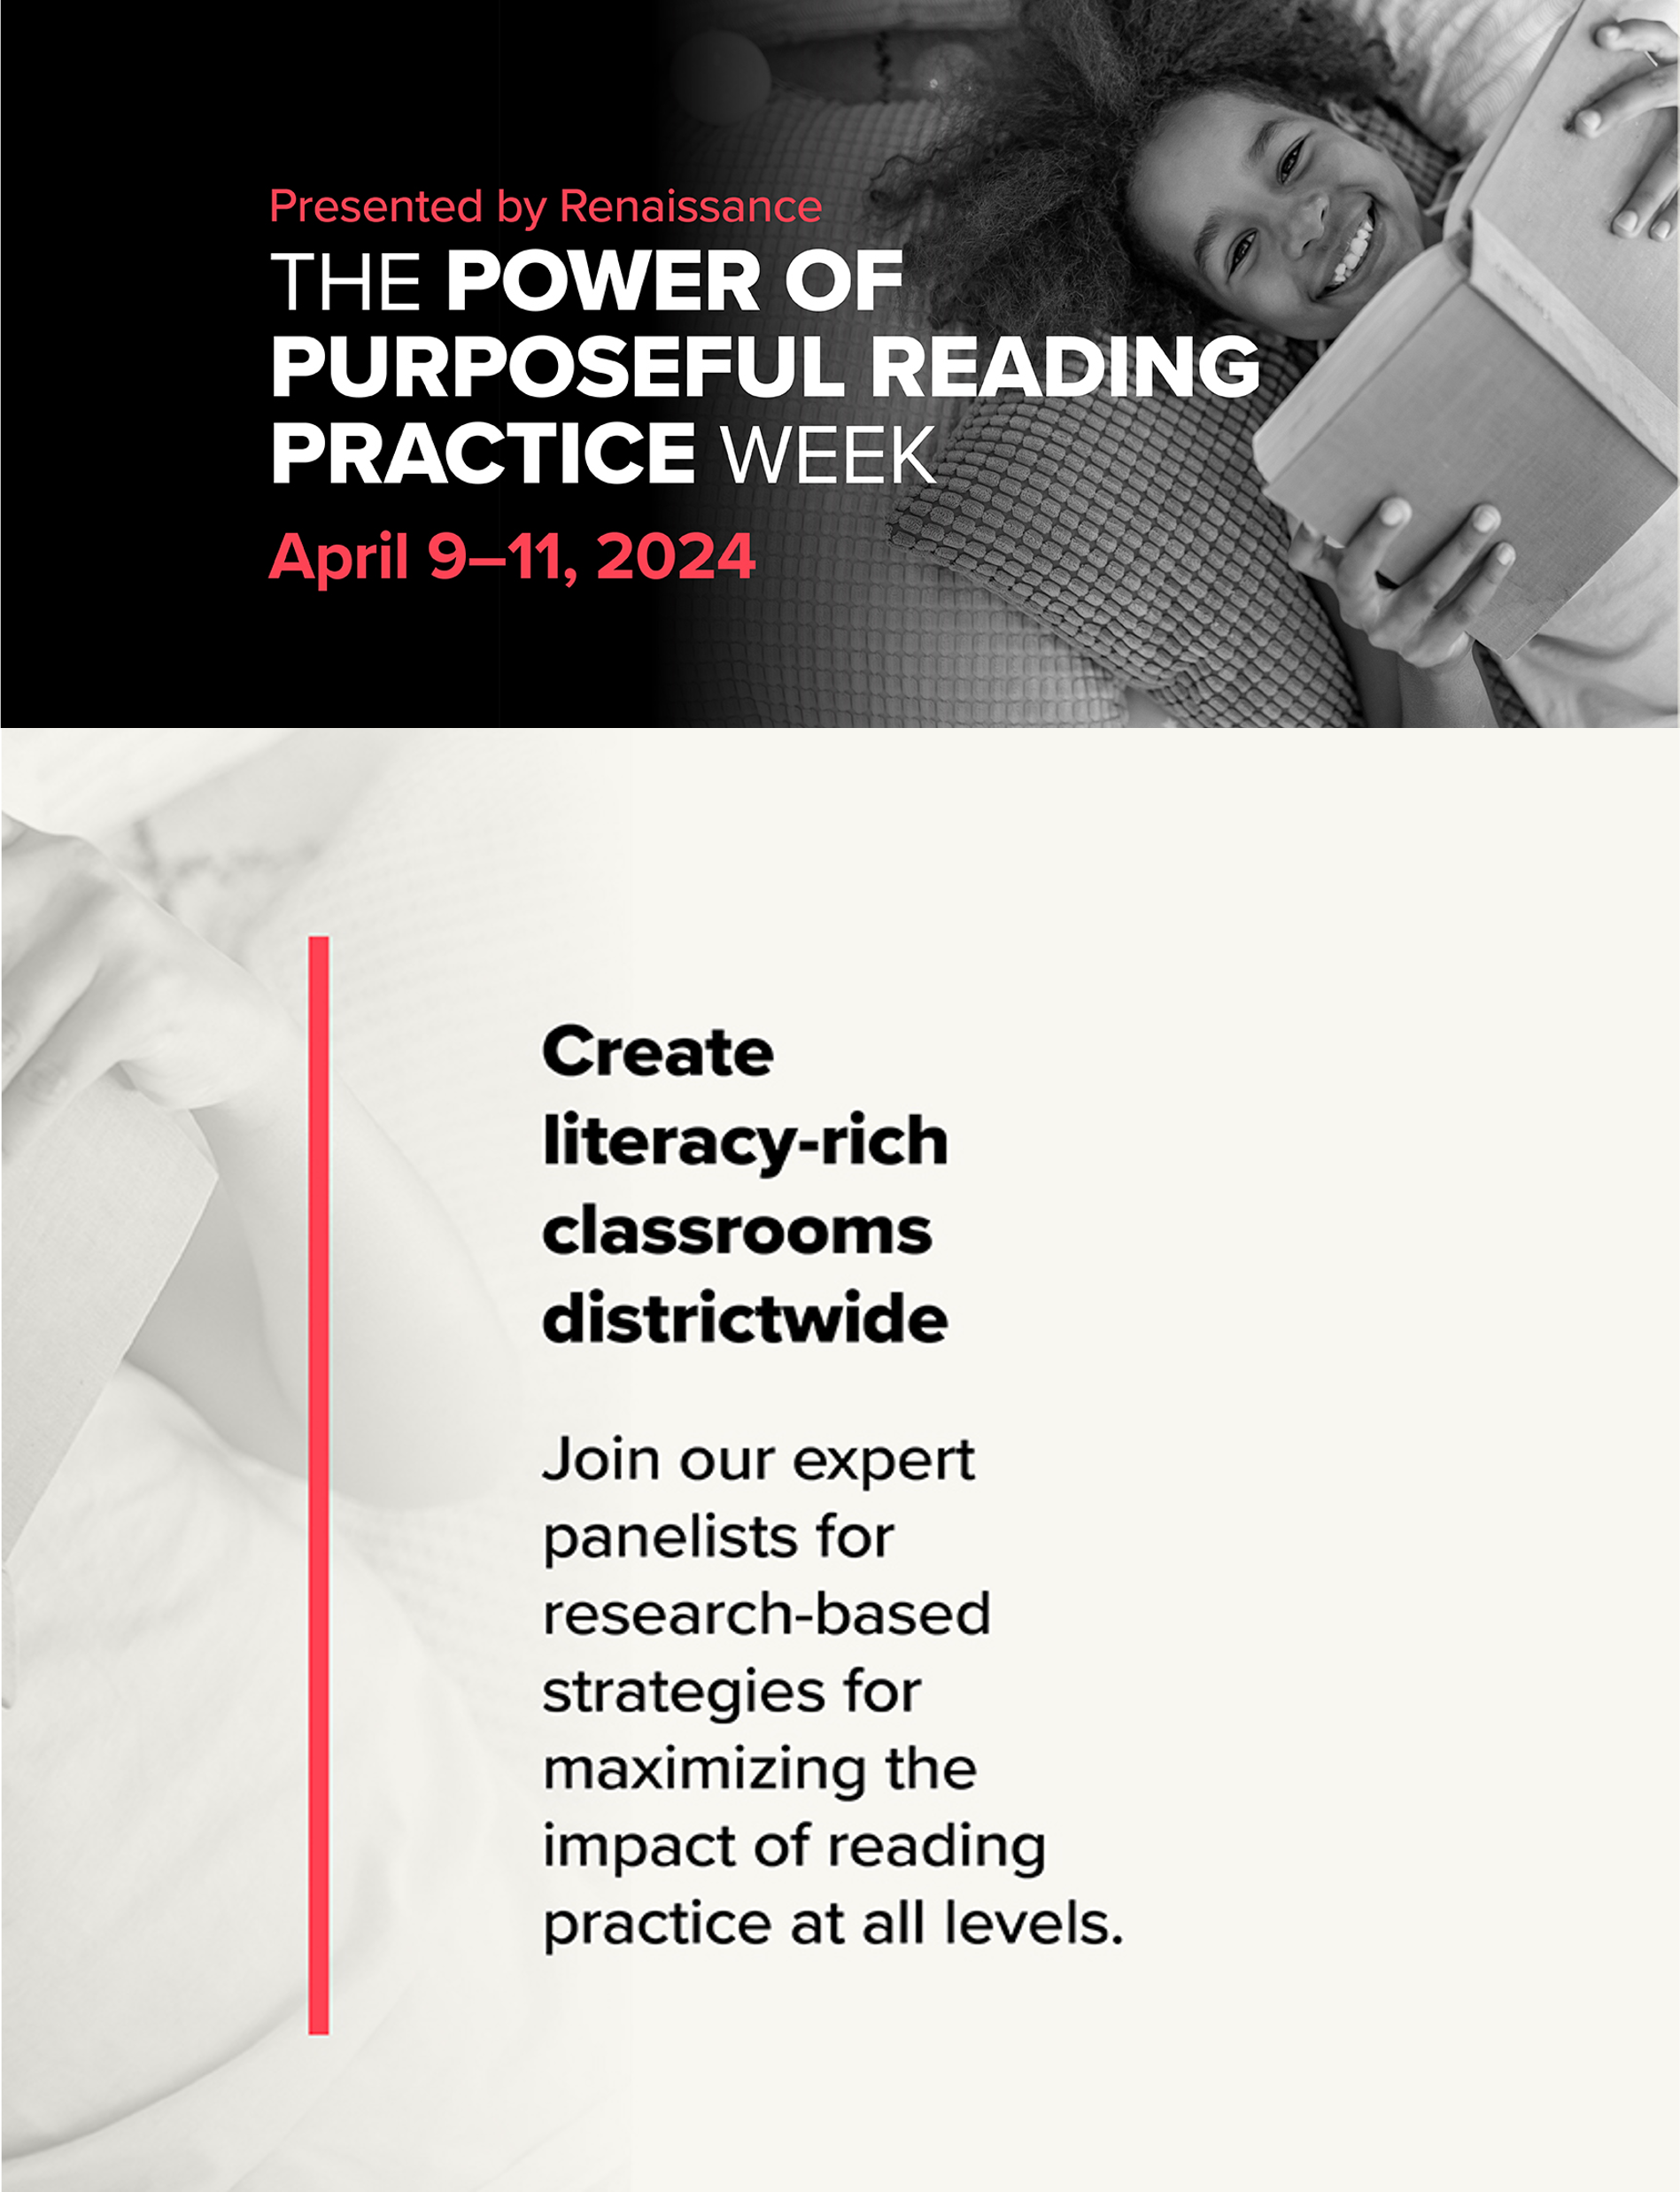 Renaissance The Power of Purposeful Reading Practice Week 2024